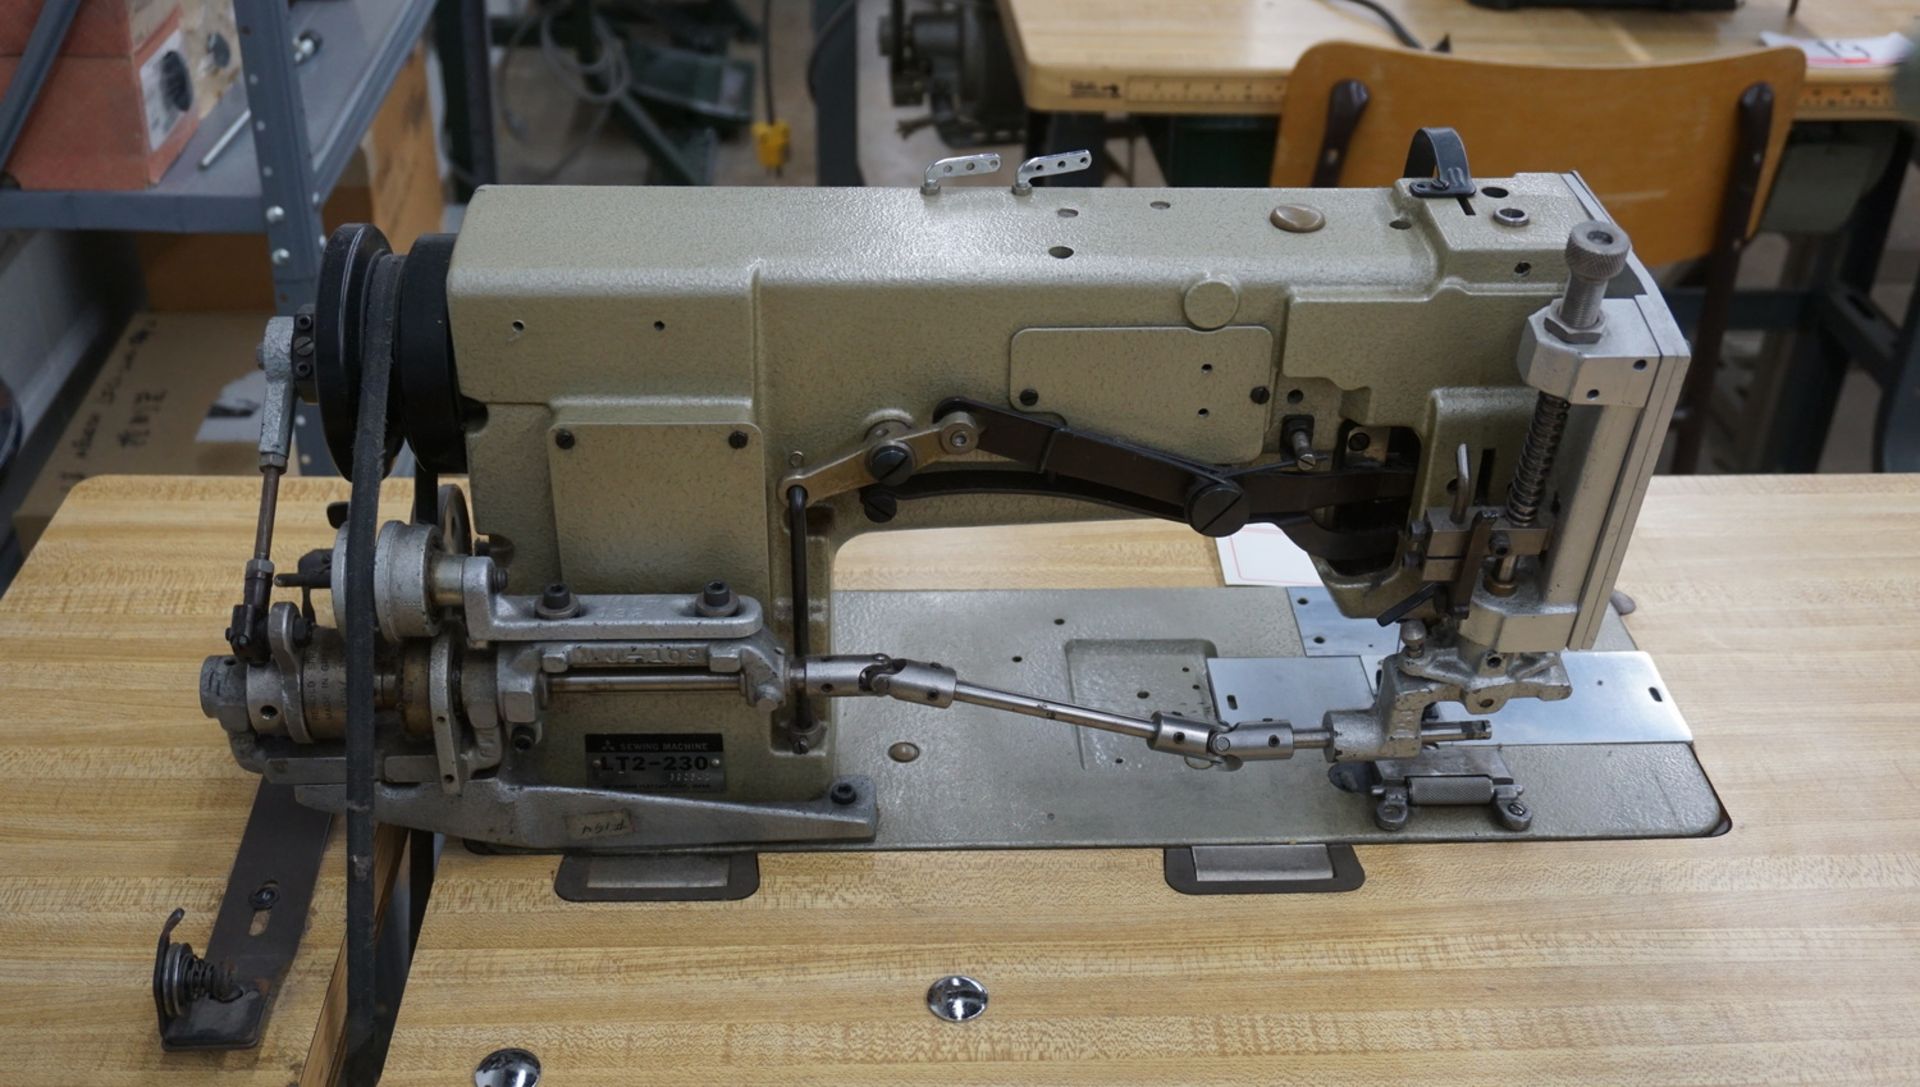 MITSUBISHI LT2-230 DOUBLE NEEDLE SEWING MACHINE, 1/2" 2 NEEDLE GAP, S/N 390542 - Image 4 of 6